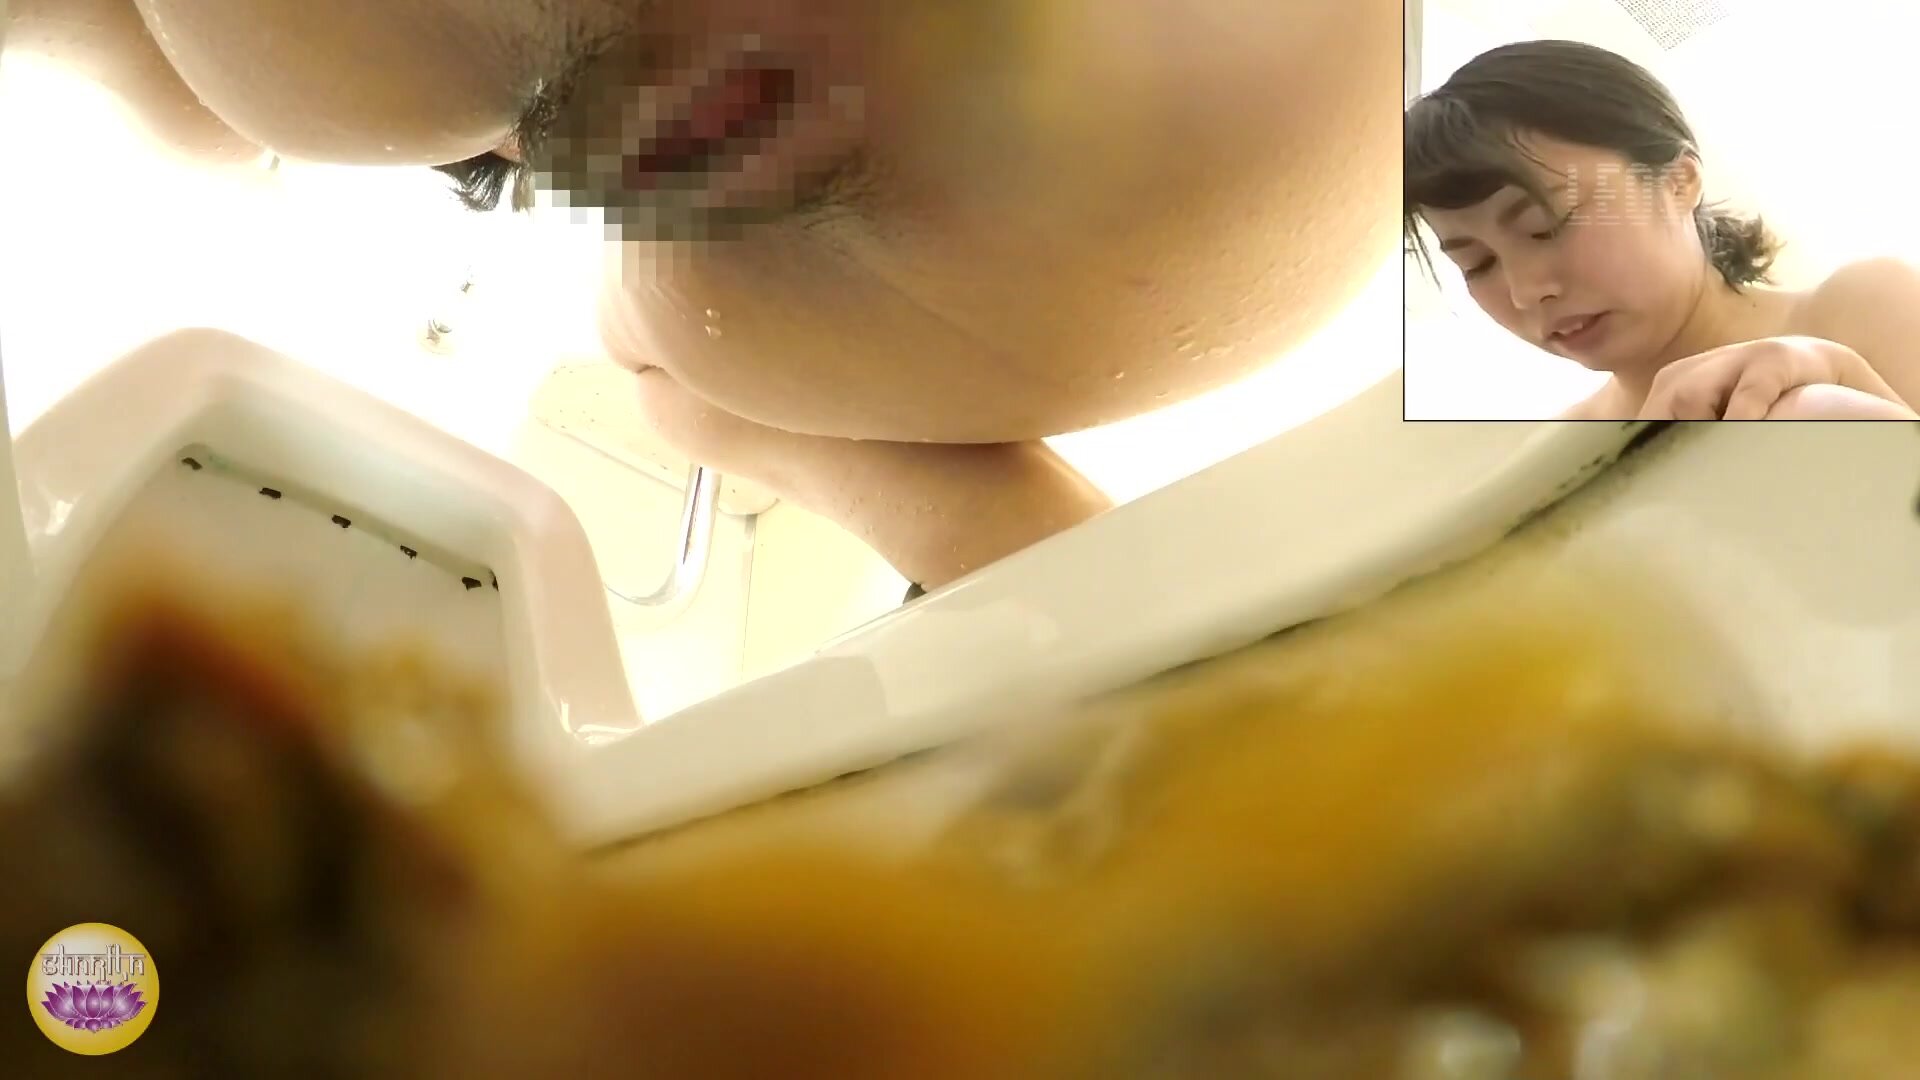 Japanese girl poop when having sauna - ThisVid.com